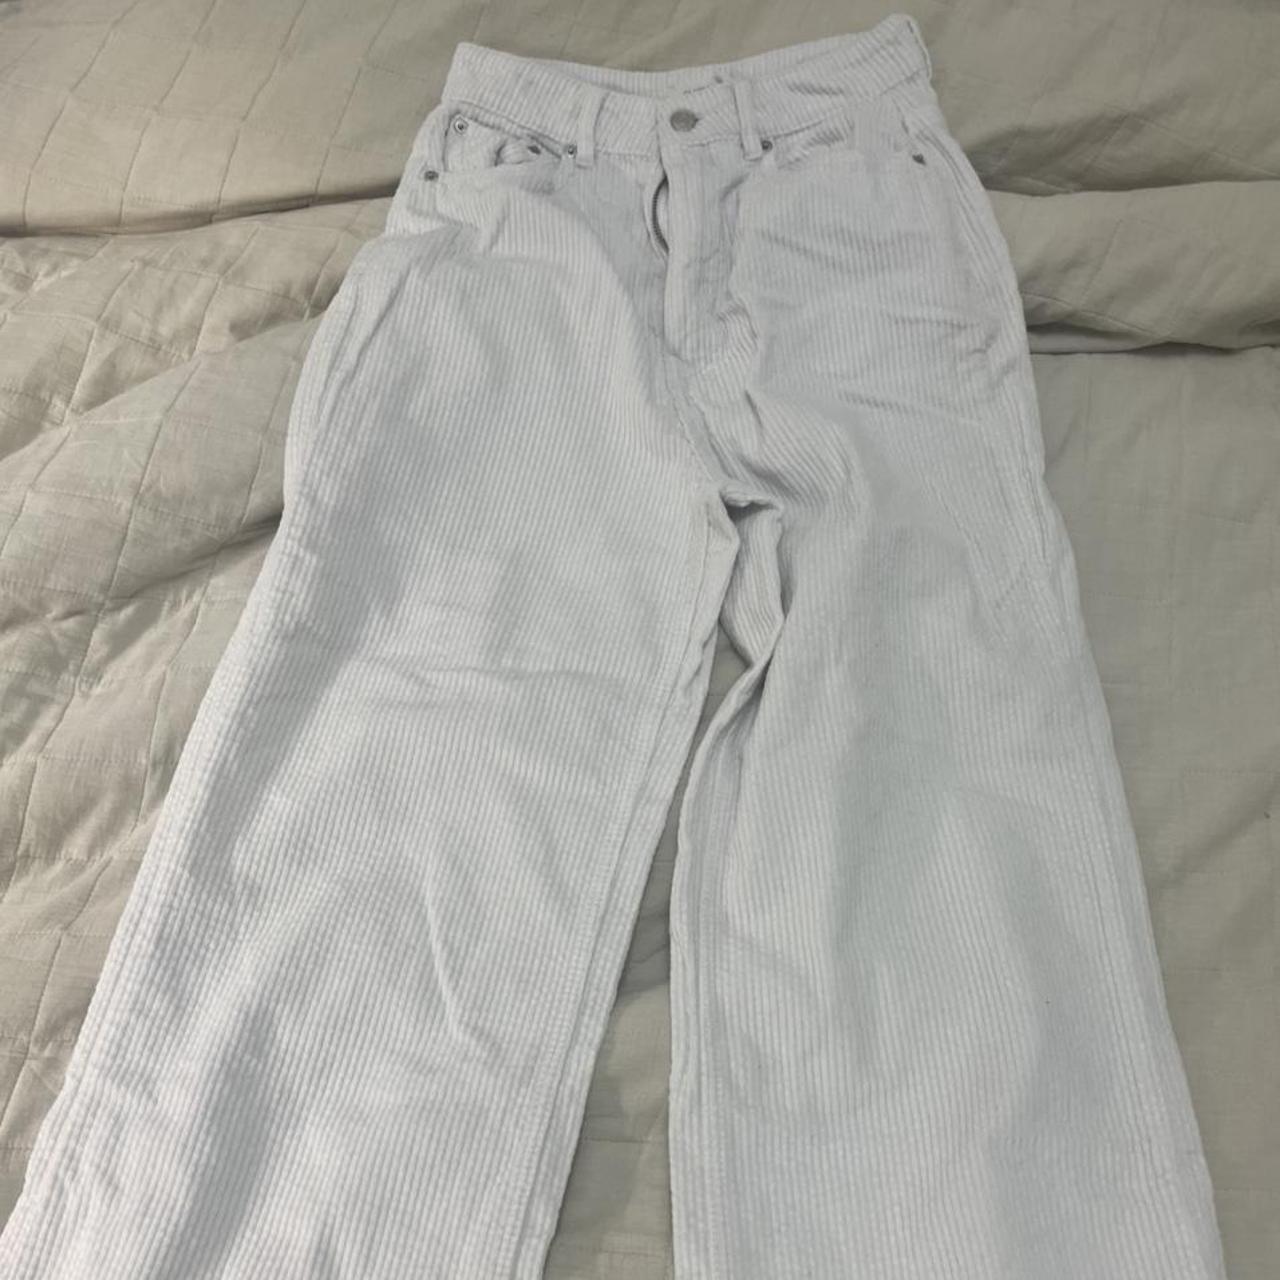 Glassons white corduroy jeans Size 8 Worn a few... - Depop